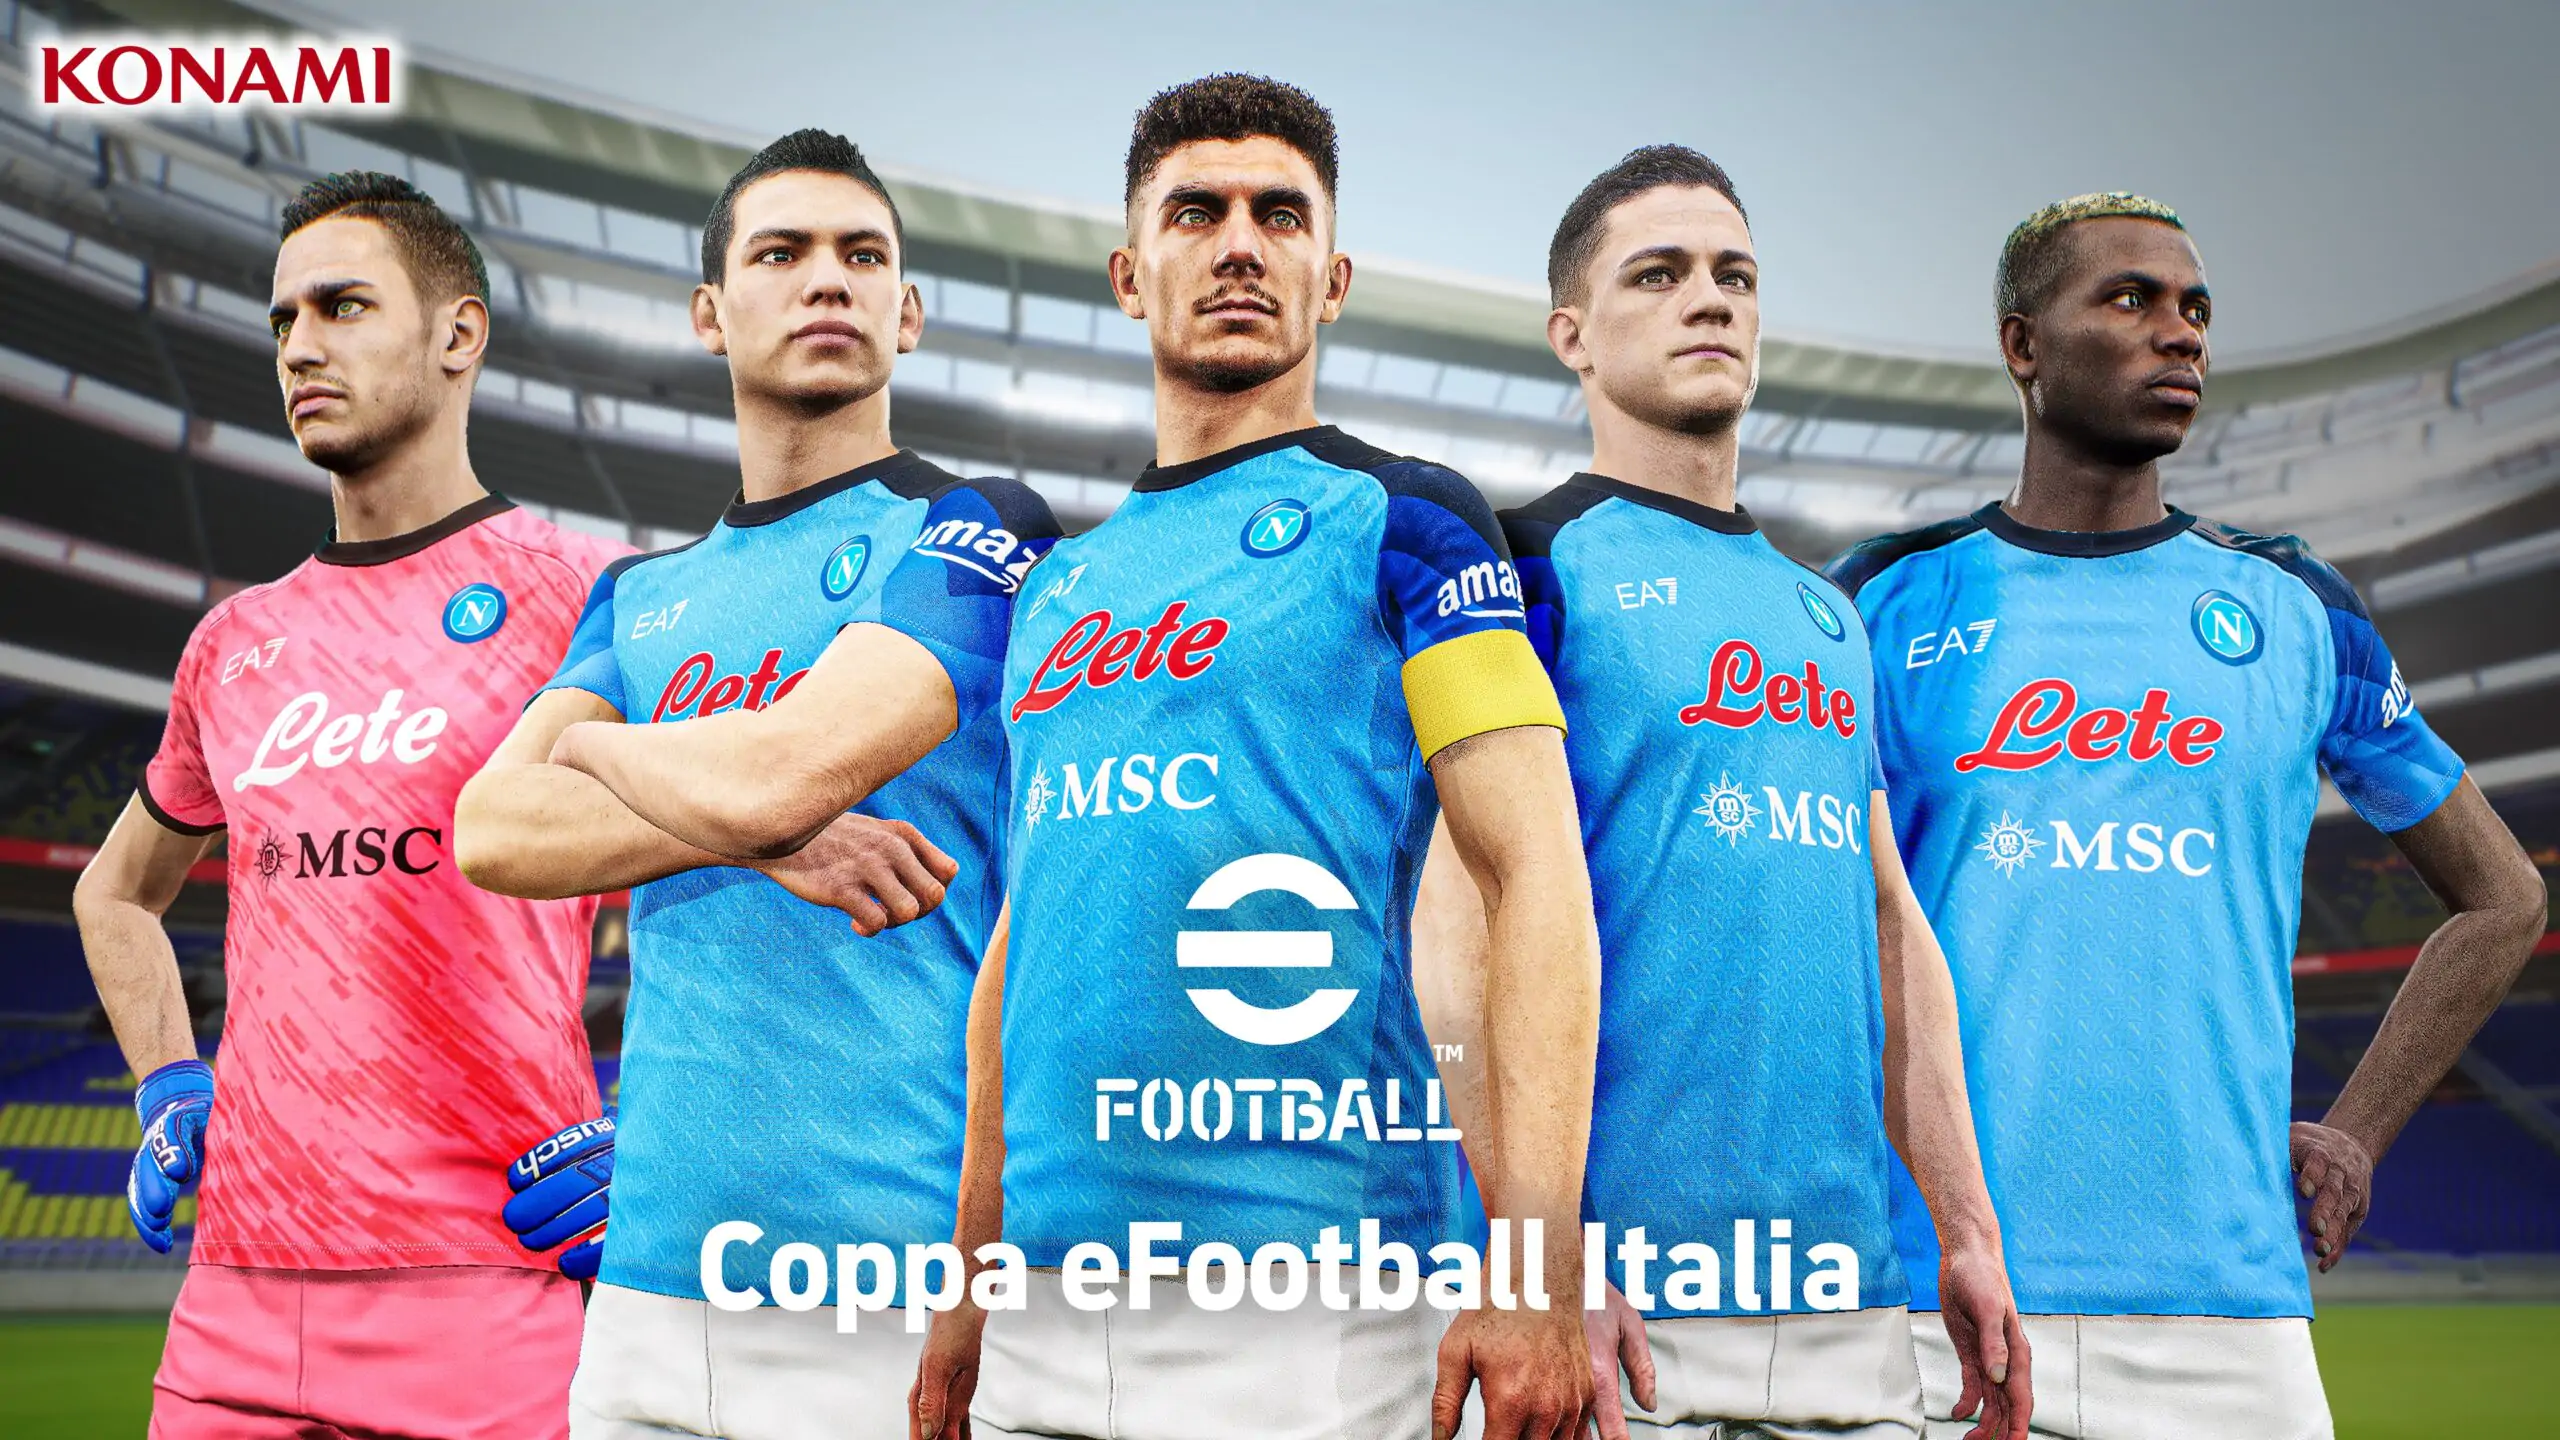 Coppa eFootball Italia